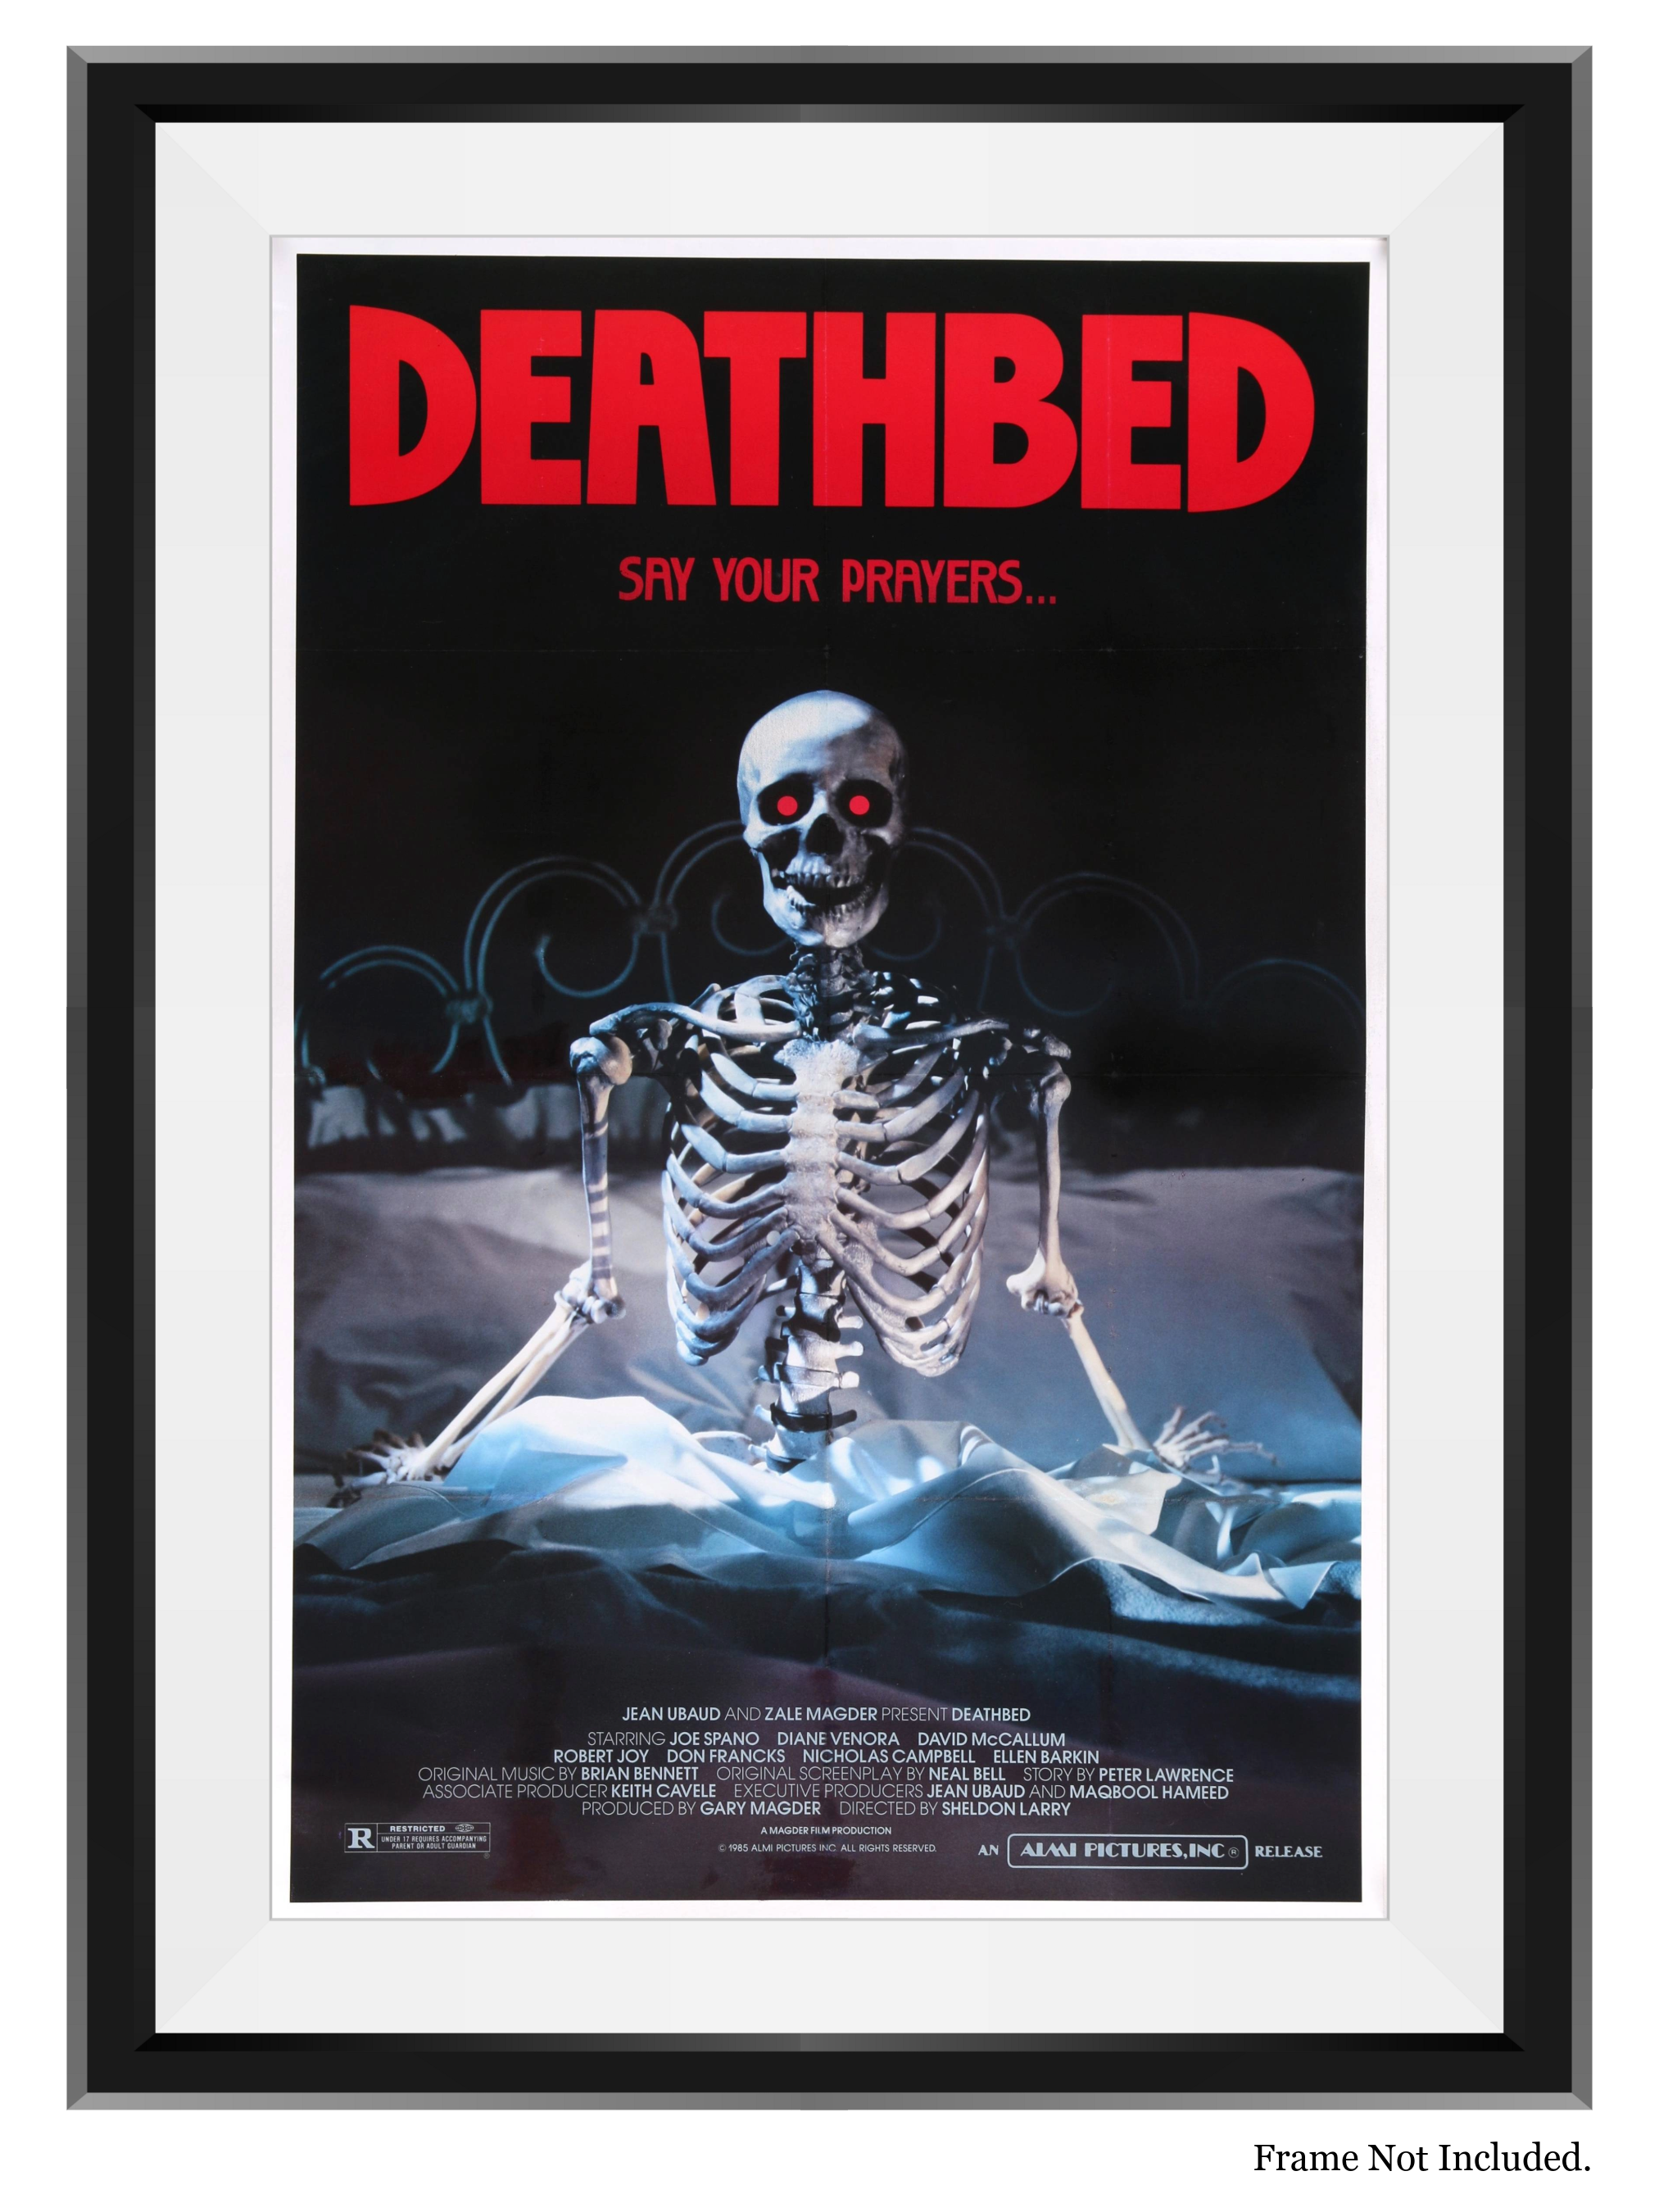 DEATHBED (1985)